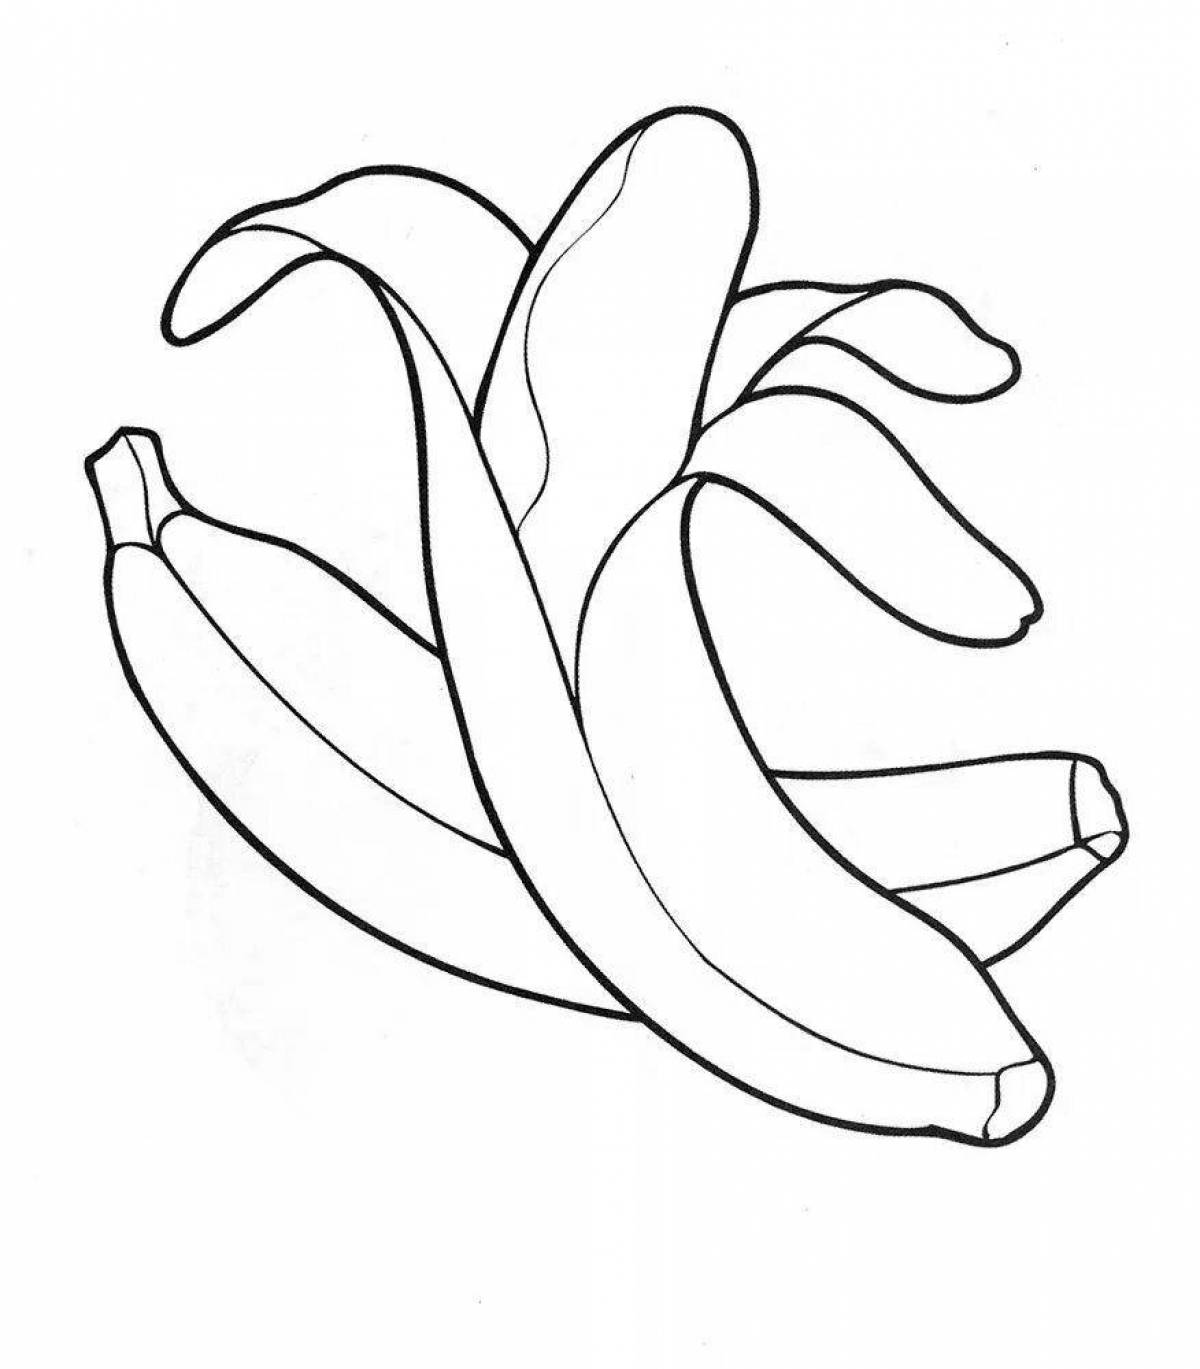 Joyful banana coloring book for 2-3 year olds